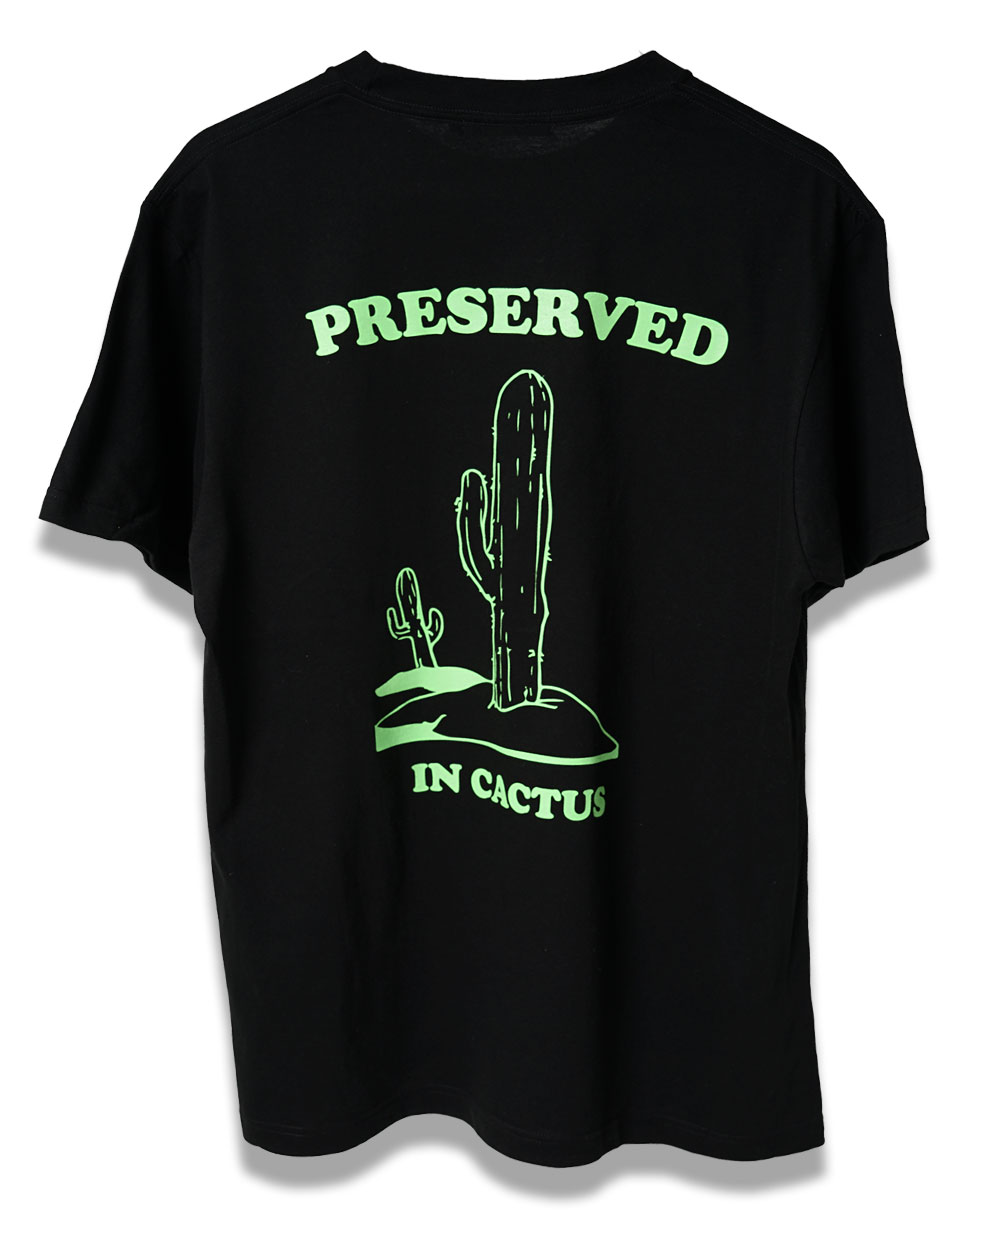 PST Artwork T-Shirt In Cactus (Black)